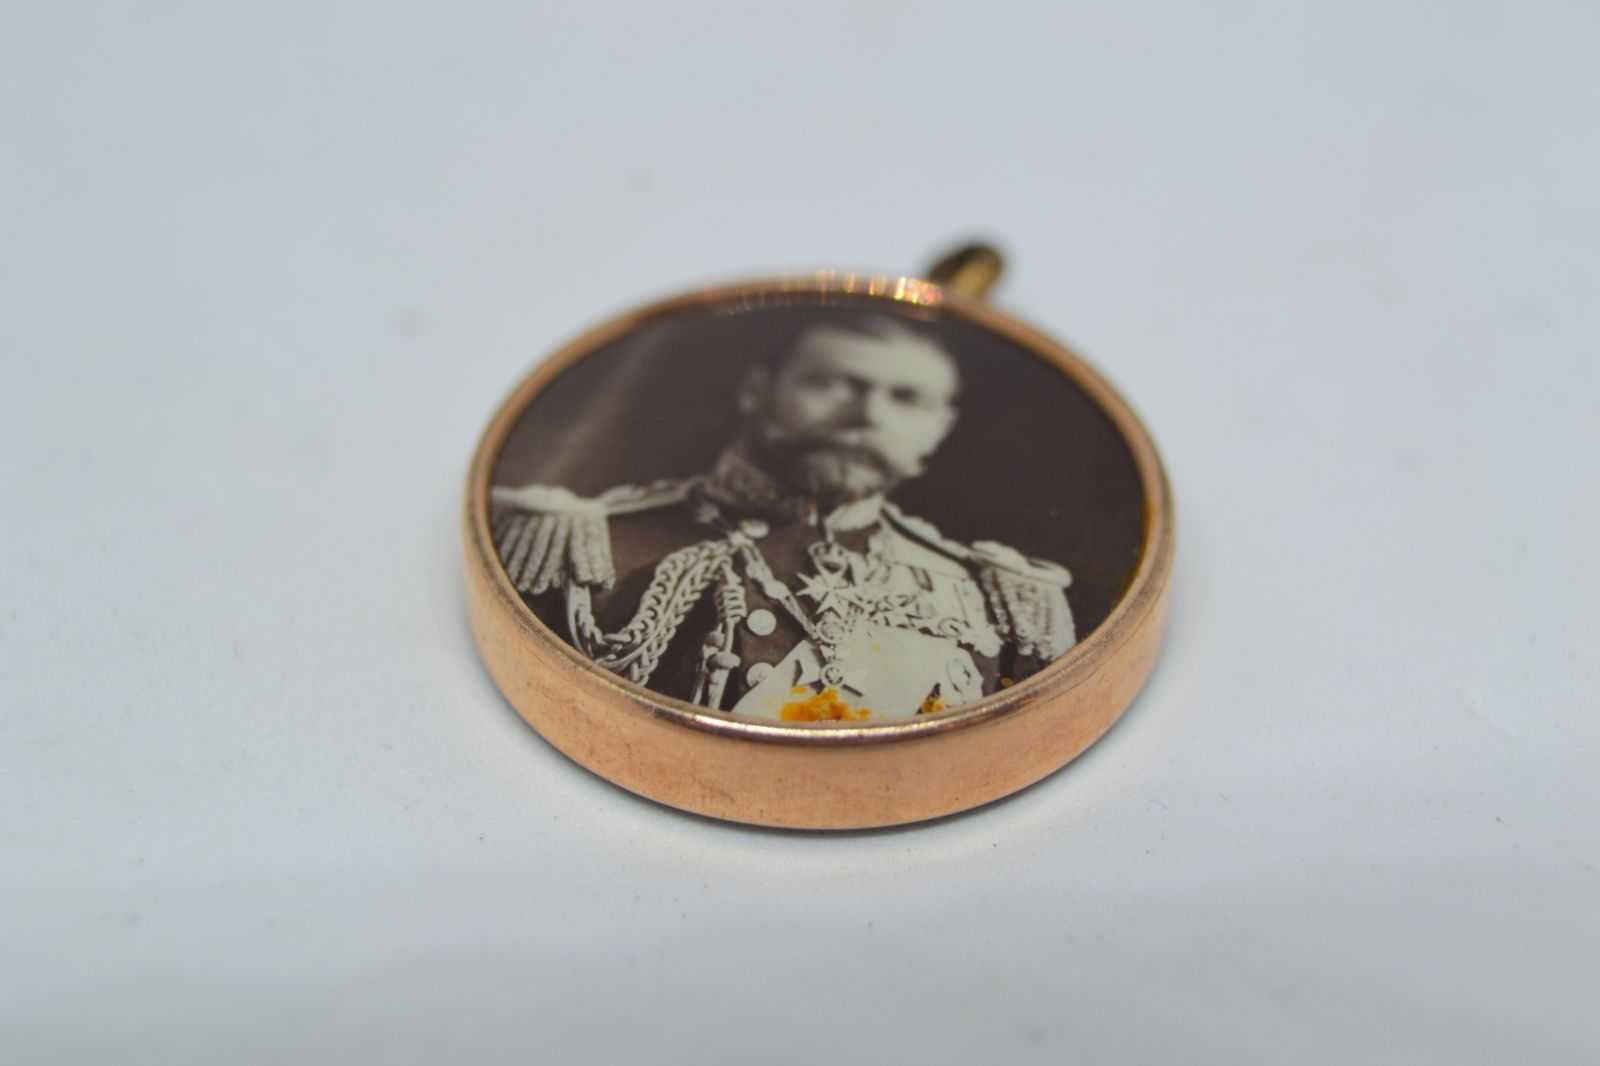 King George V charm pendant